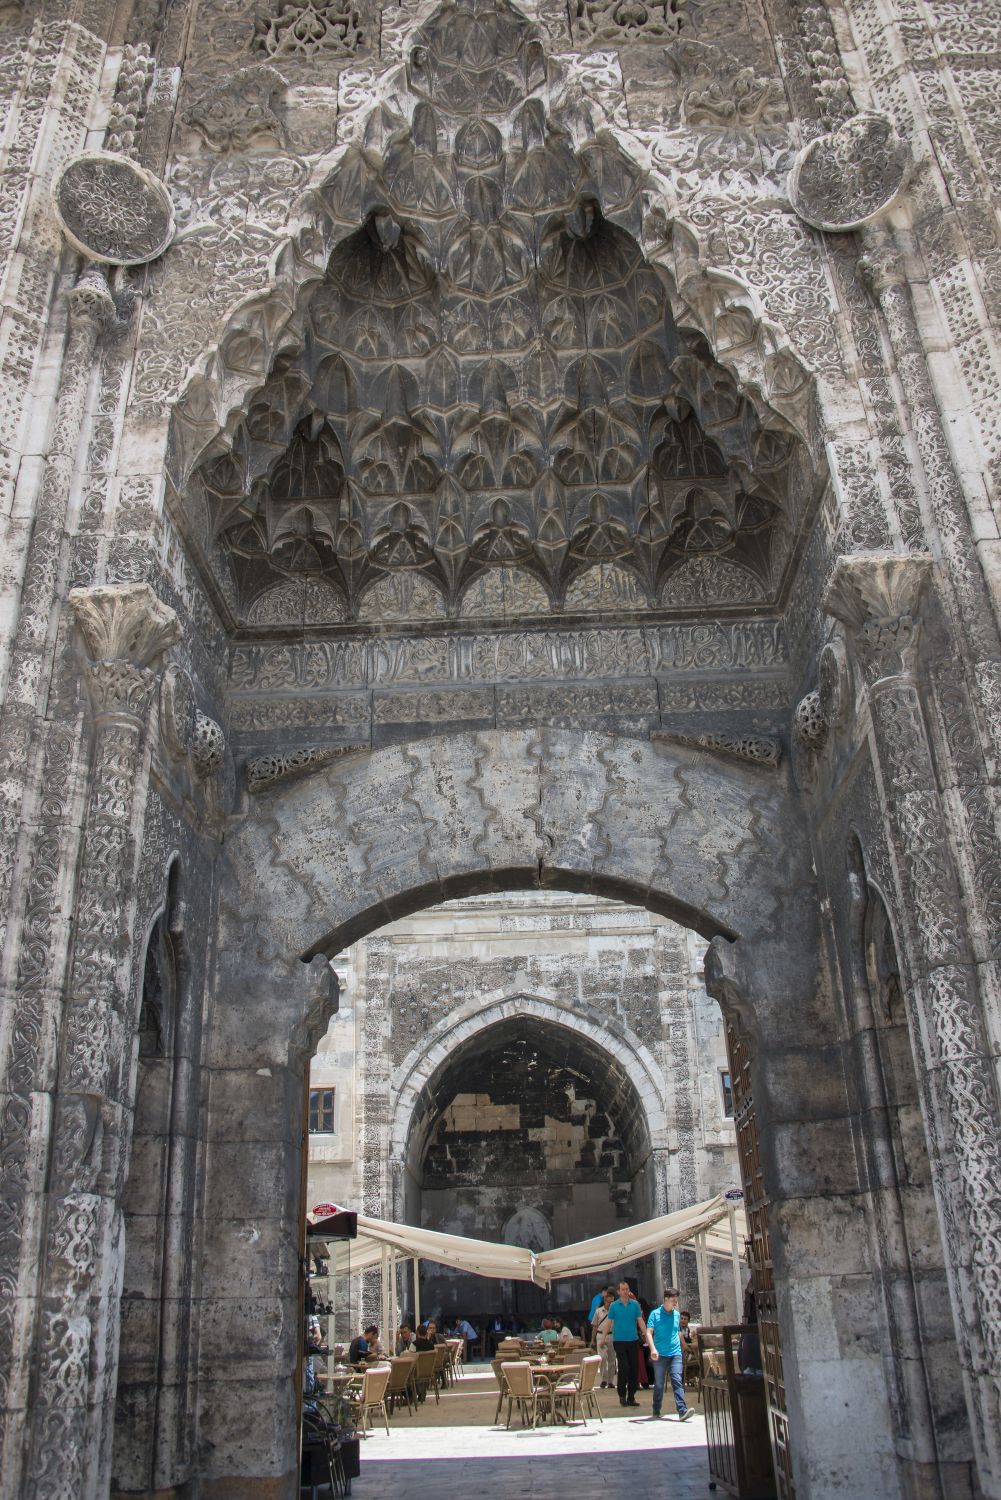 Entrance portal: view of muqarnas hood and through gate into interior.